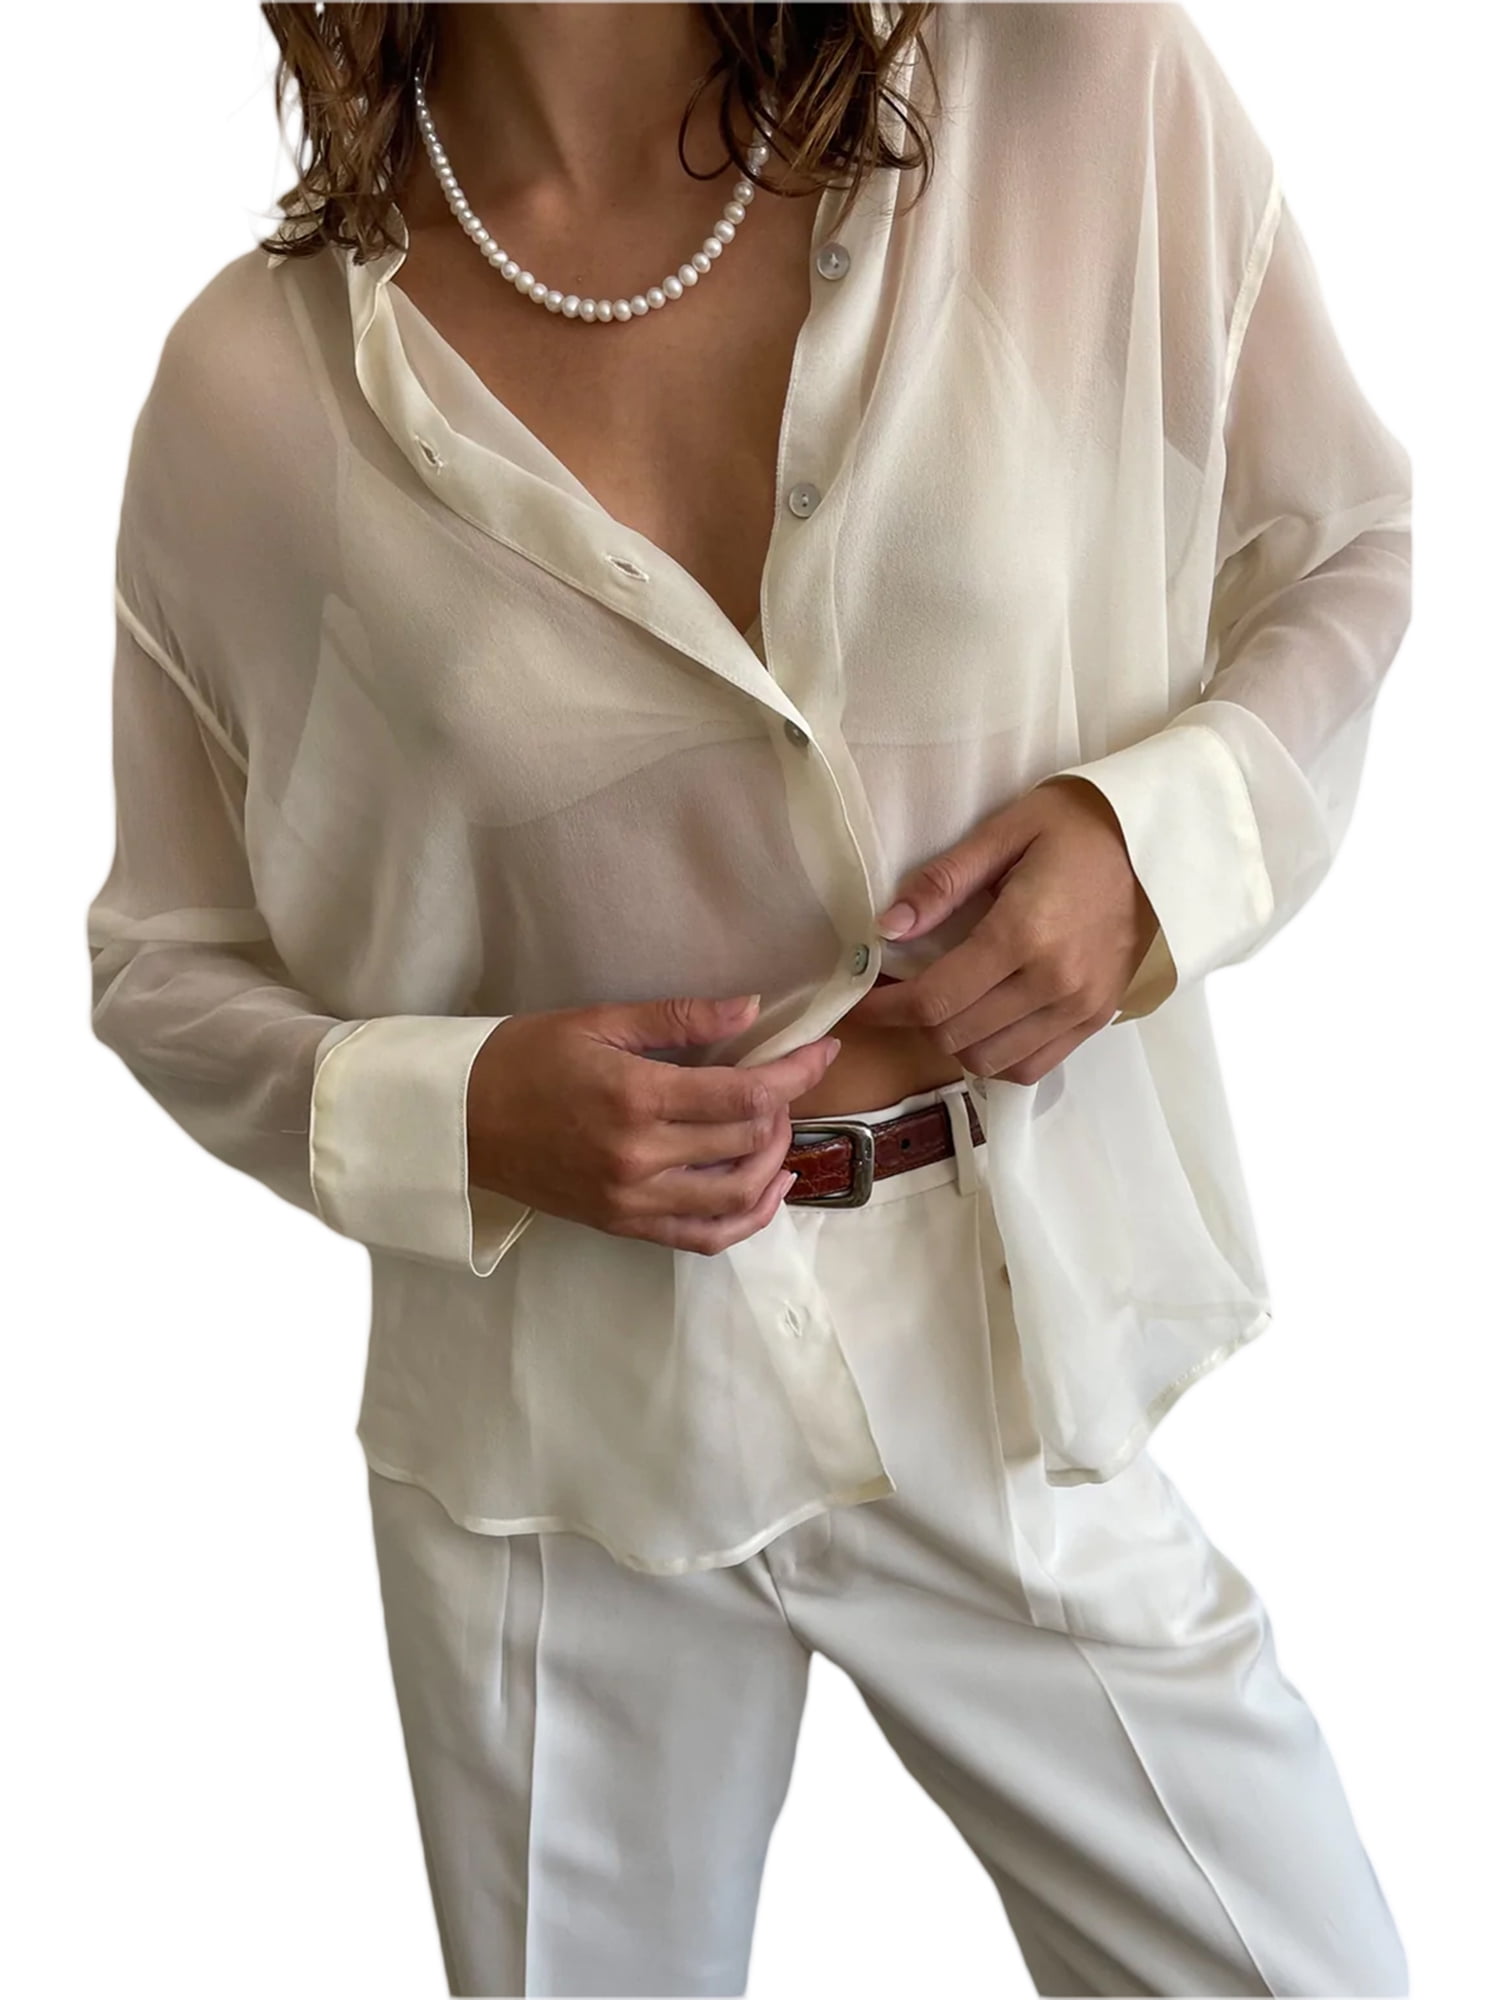 wybzd Women Sheer Mesh See Through Lapel Button Down Shirt Long Sleeve  Spring Autumn Blouse Tops White L 